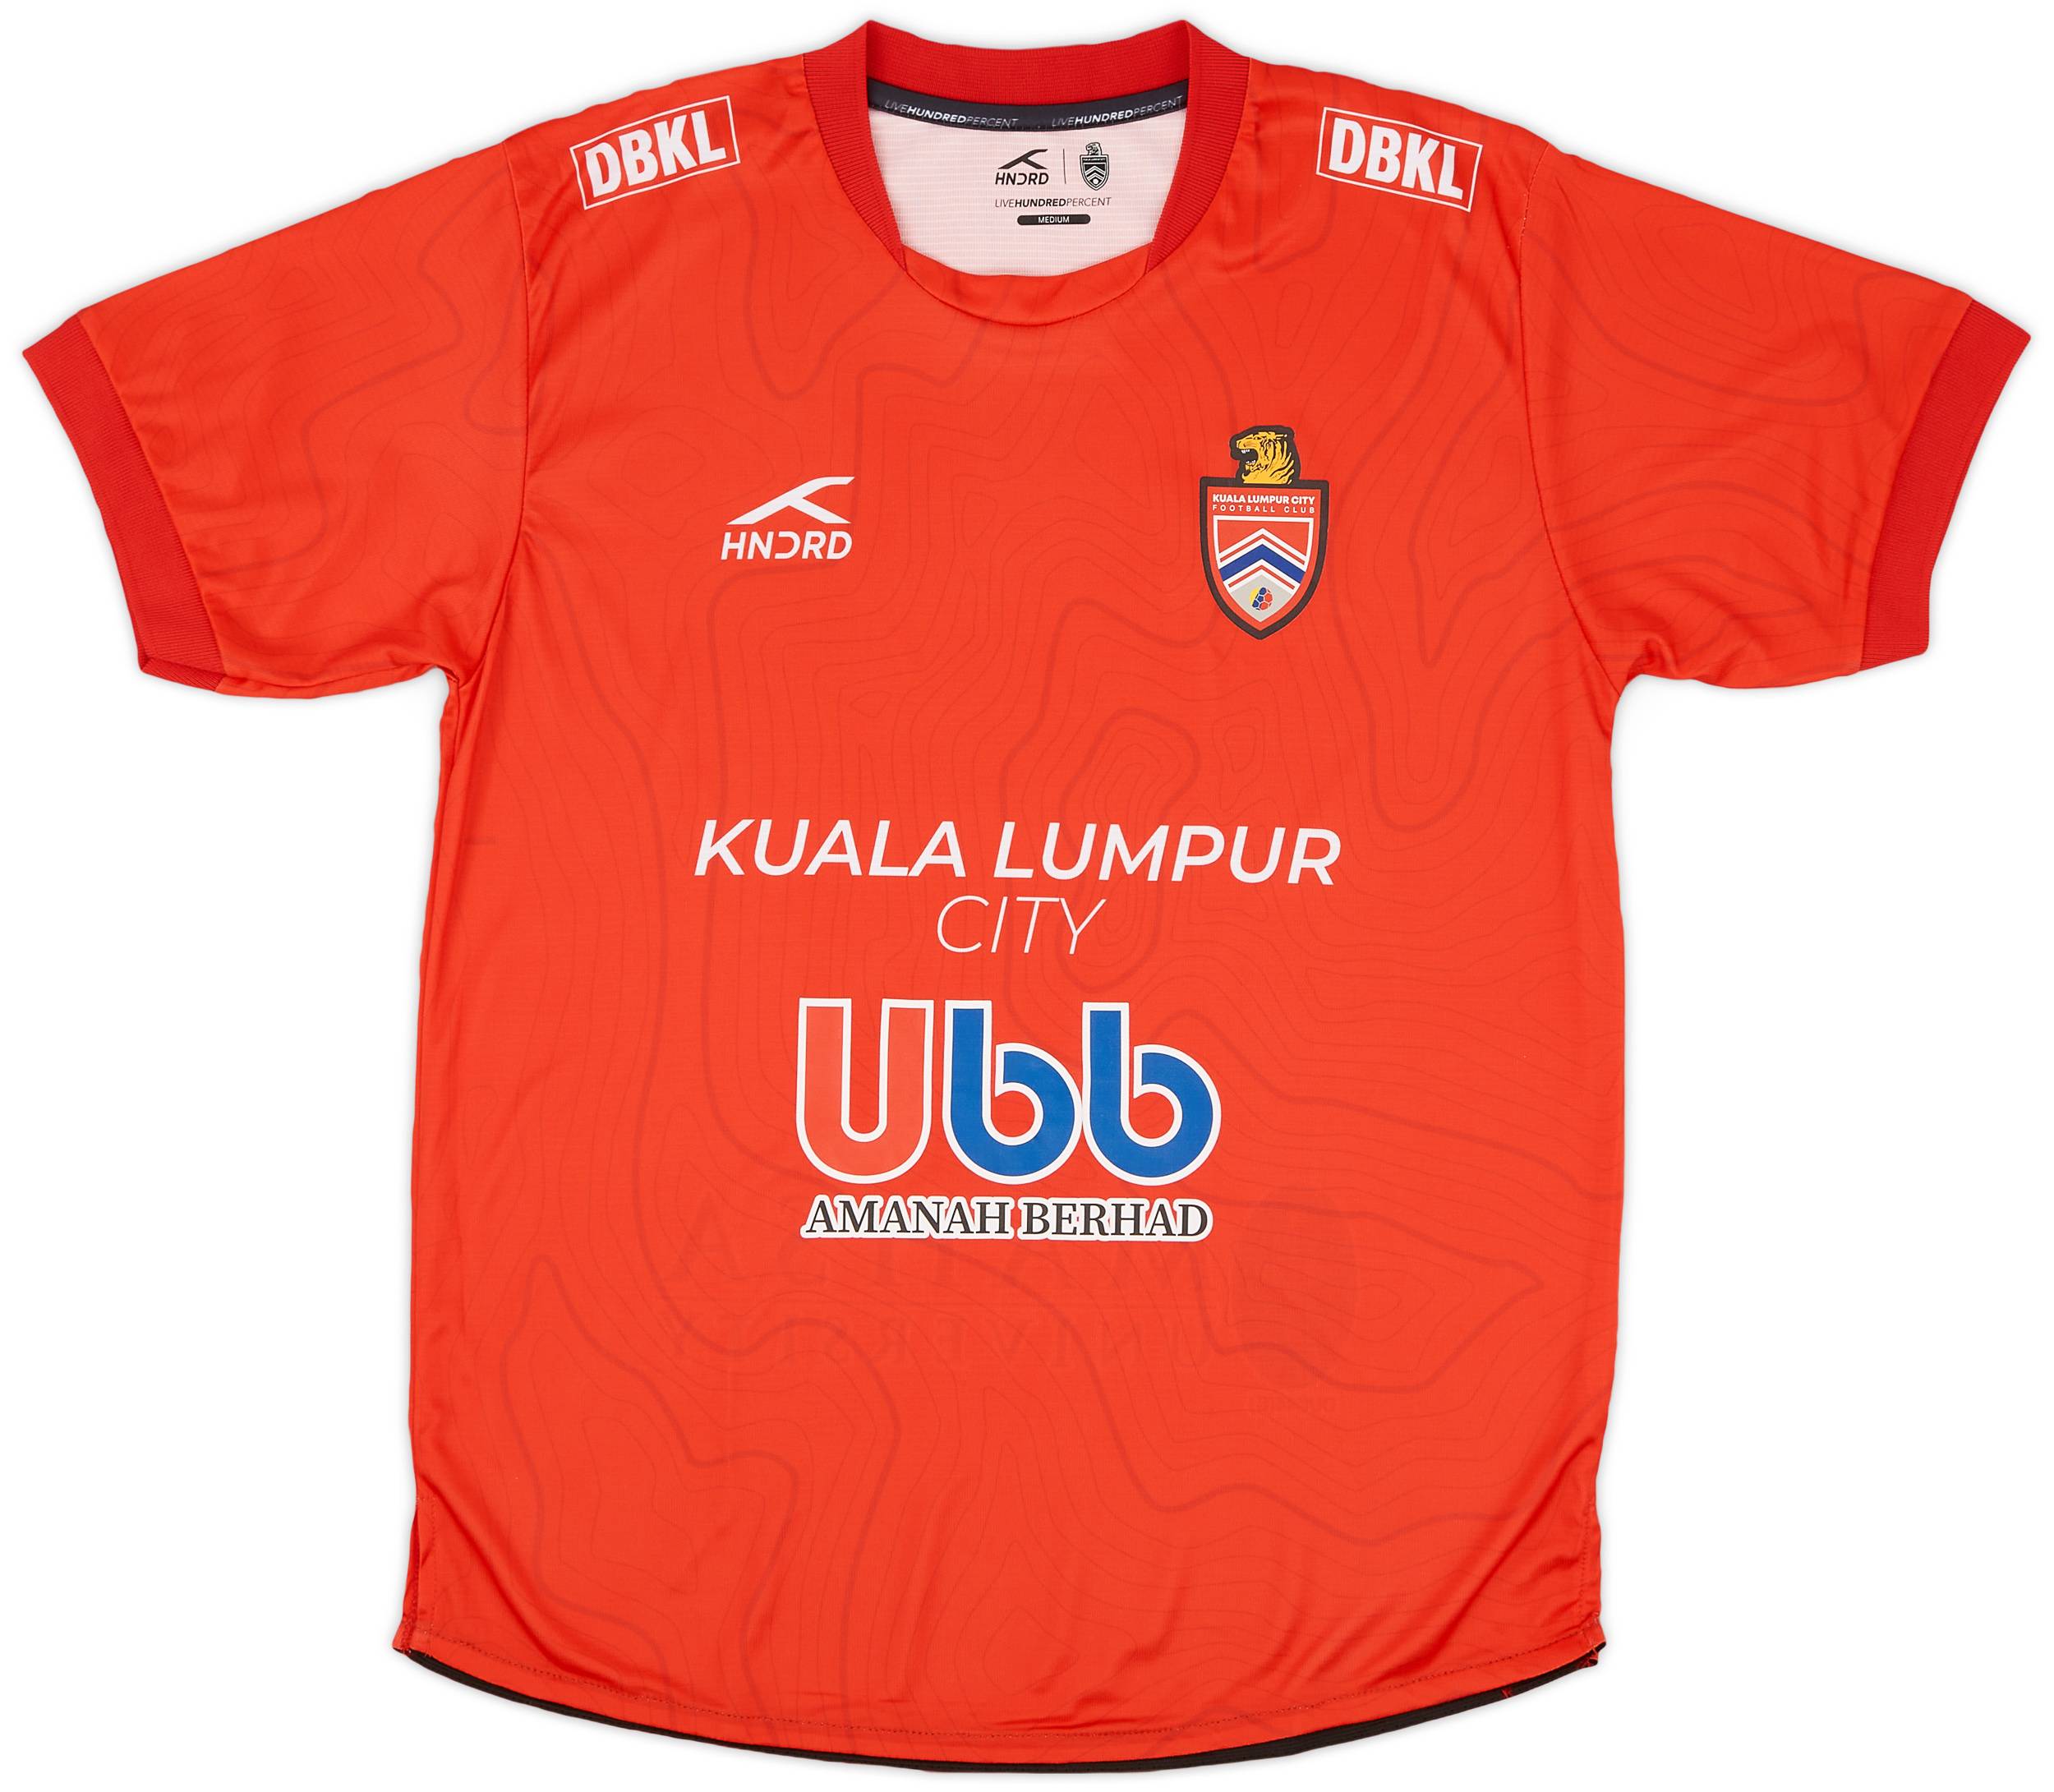 2022 Kuala Lumpur City Home Shirt (M)